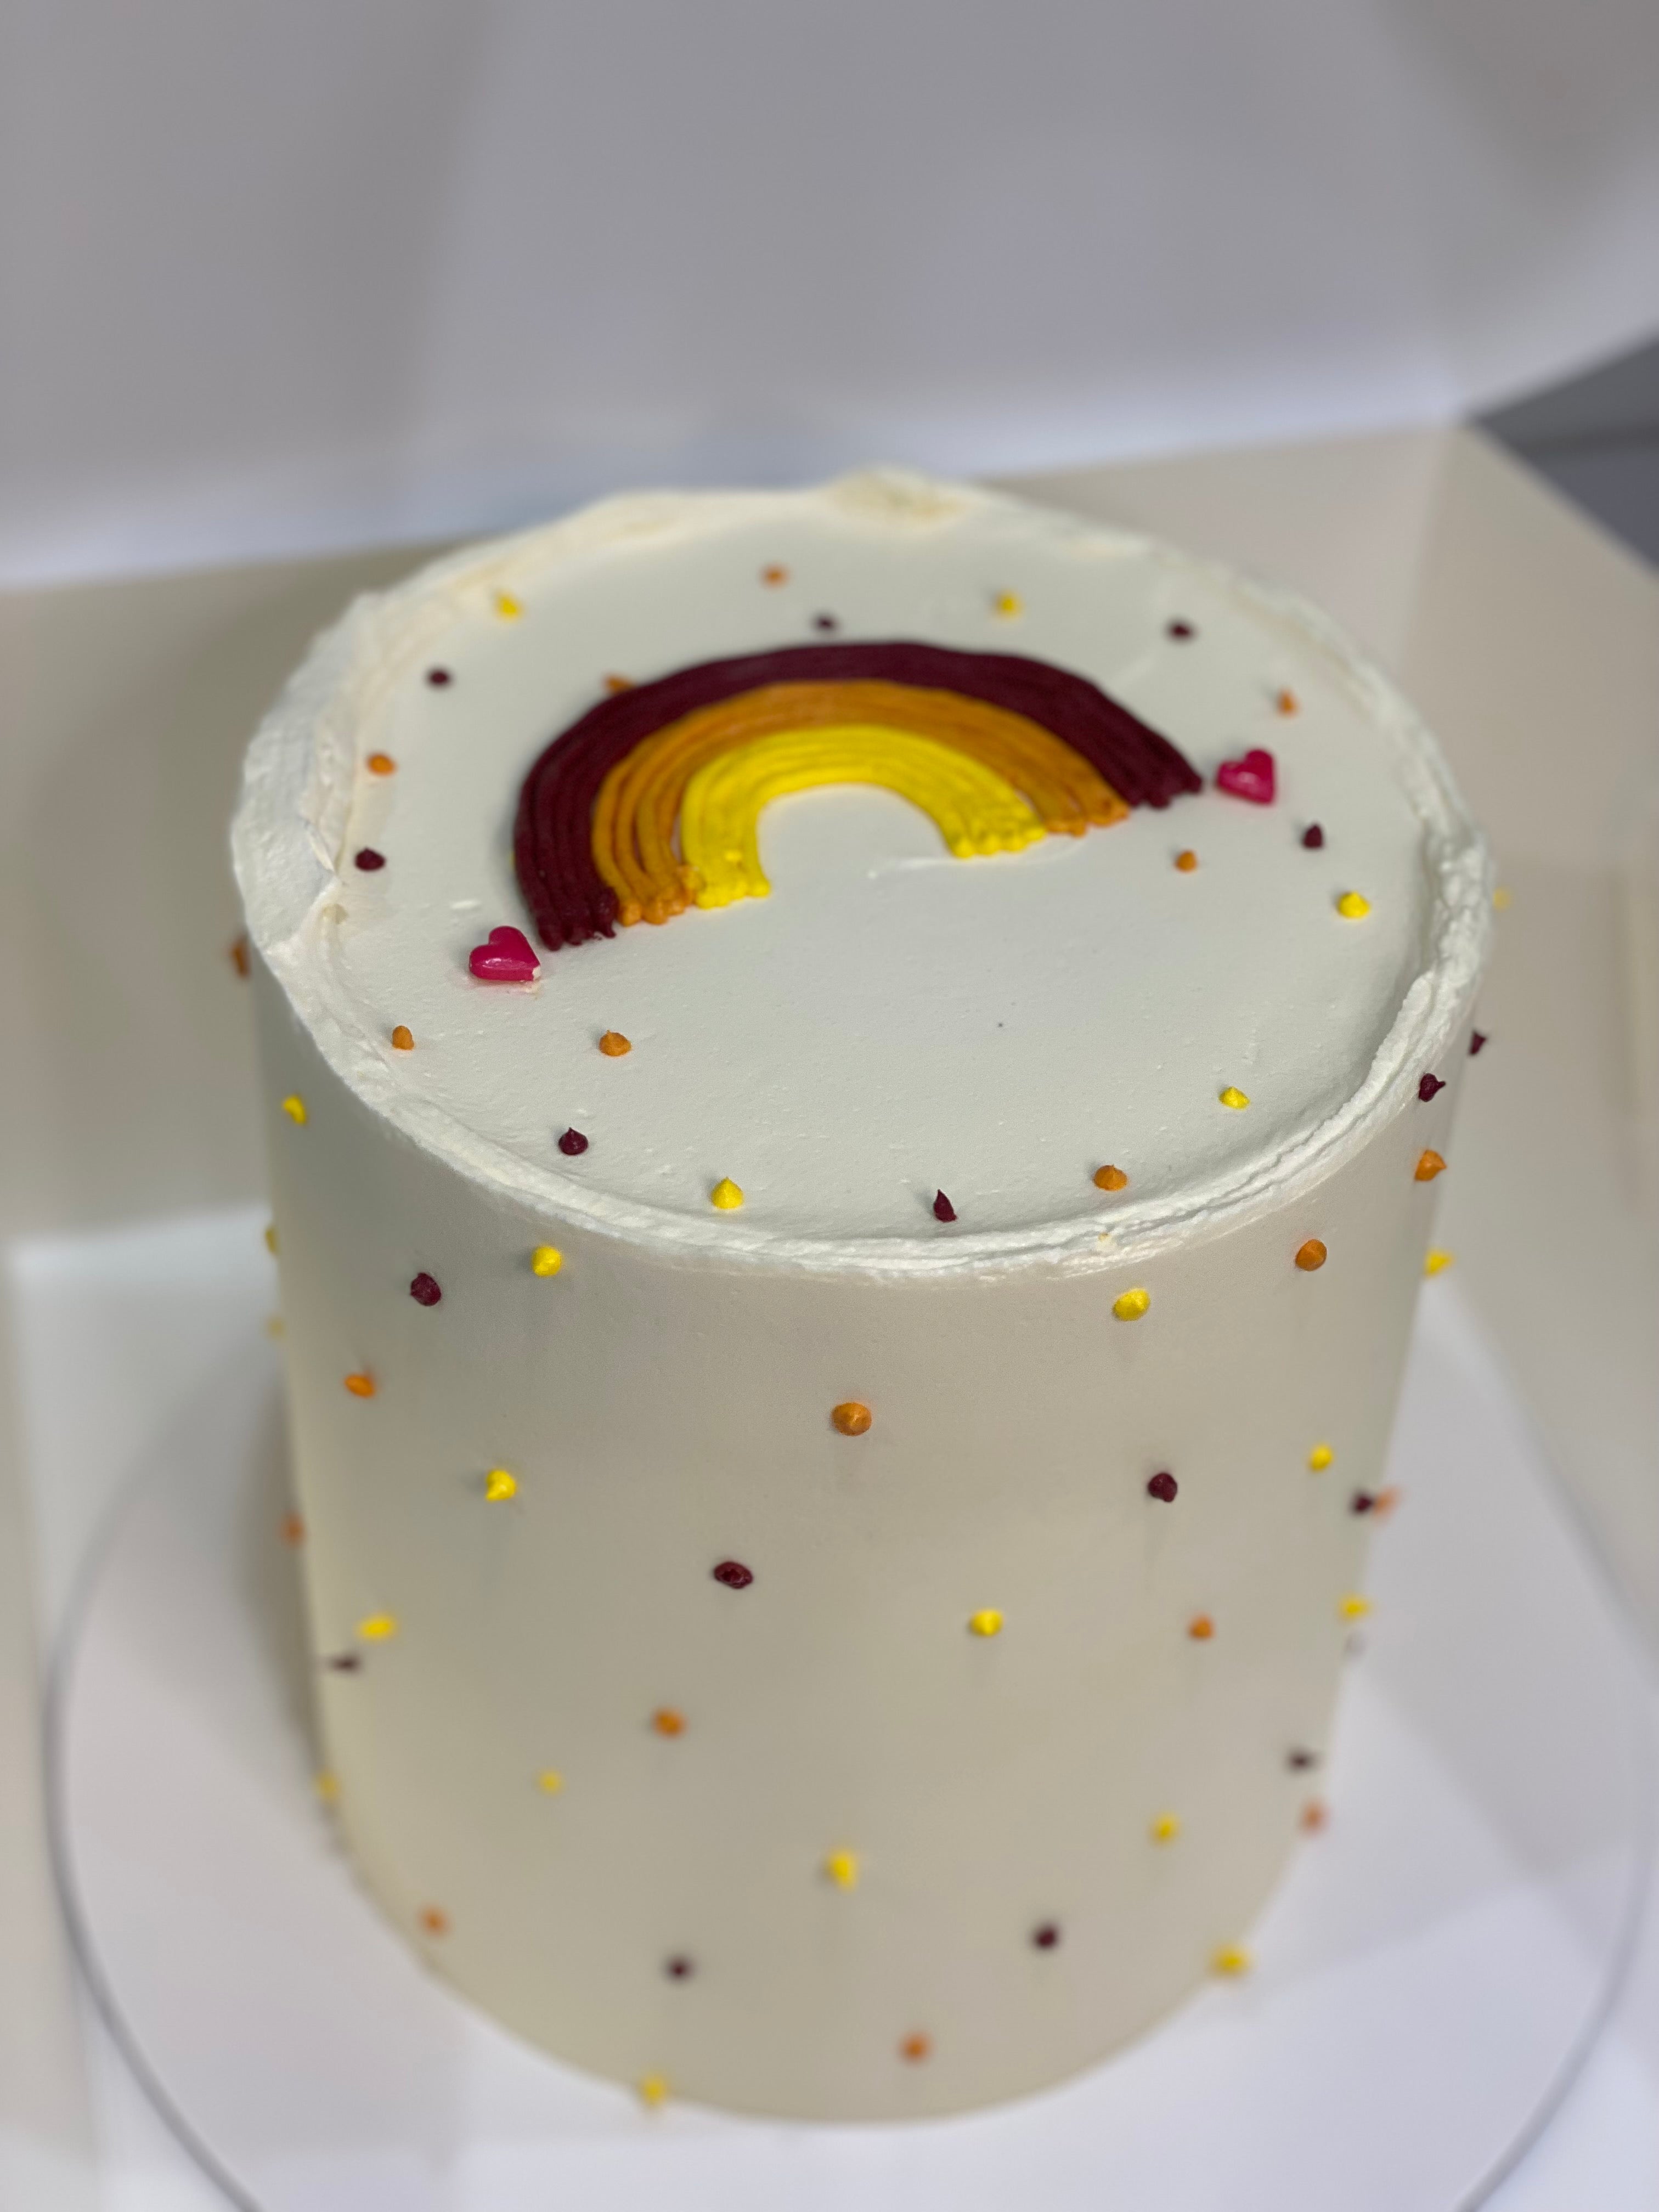 6" - Piped rainbow  cake